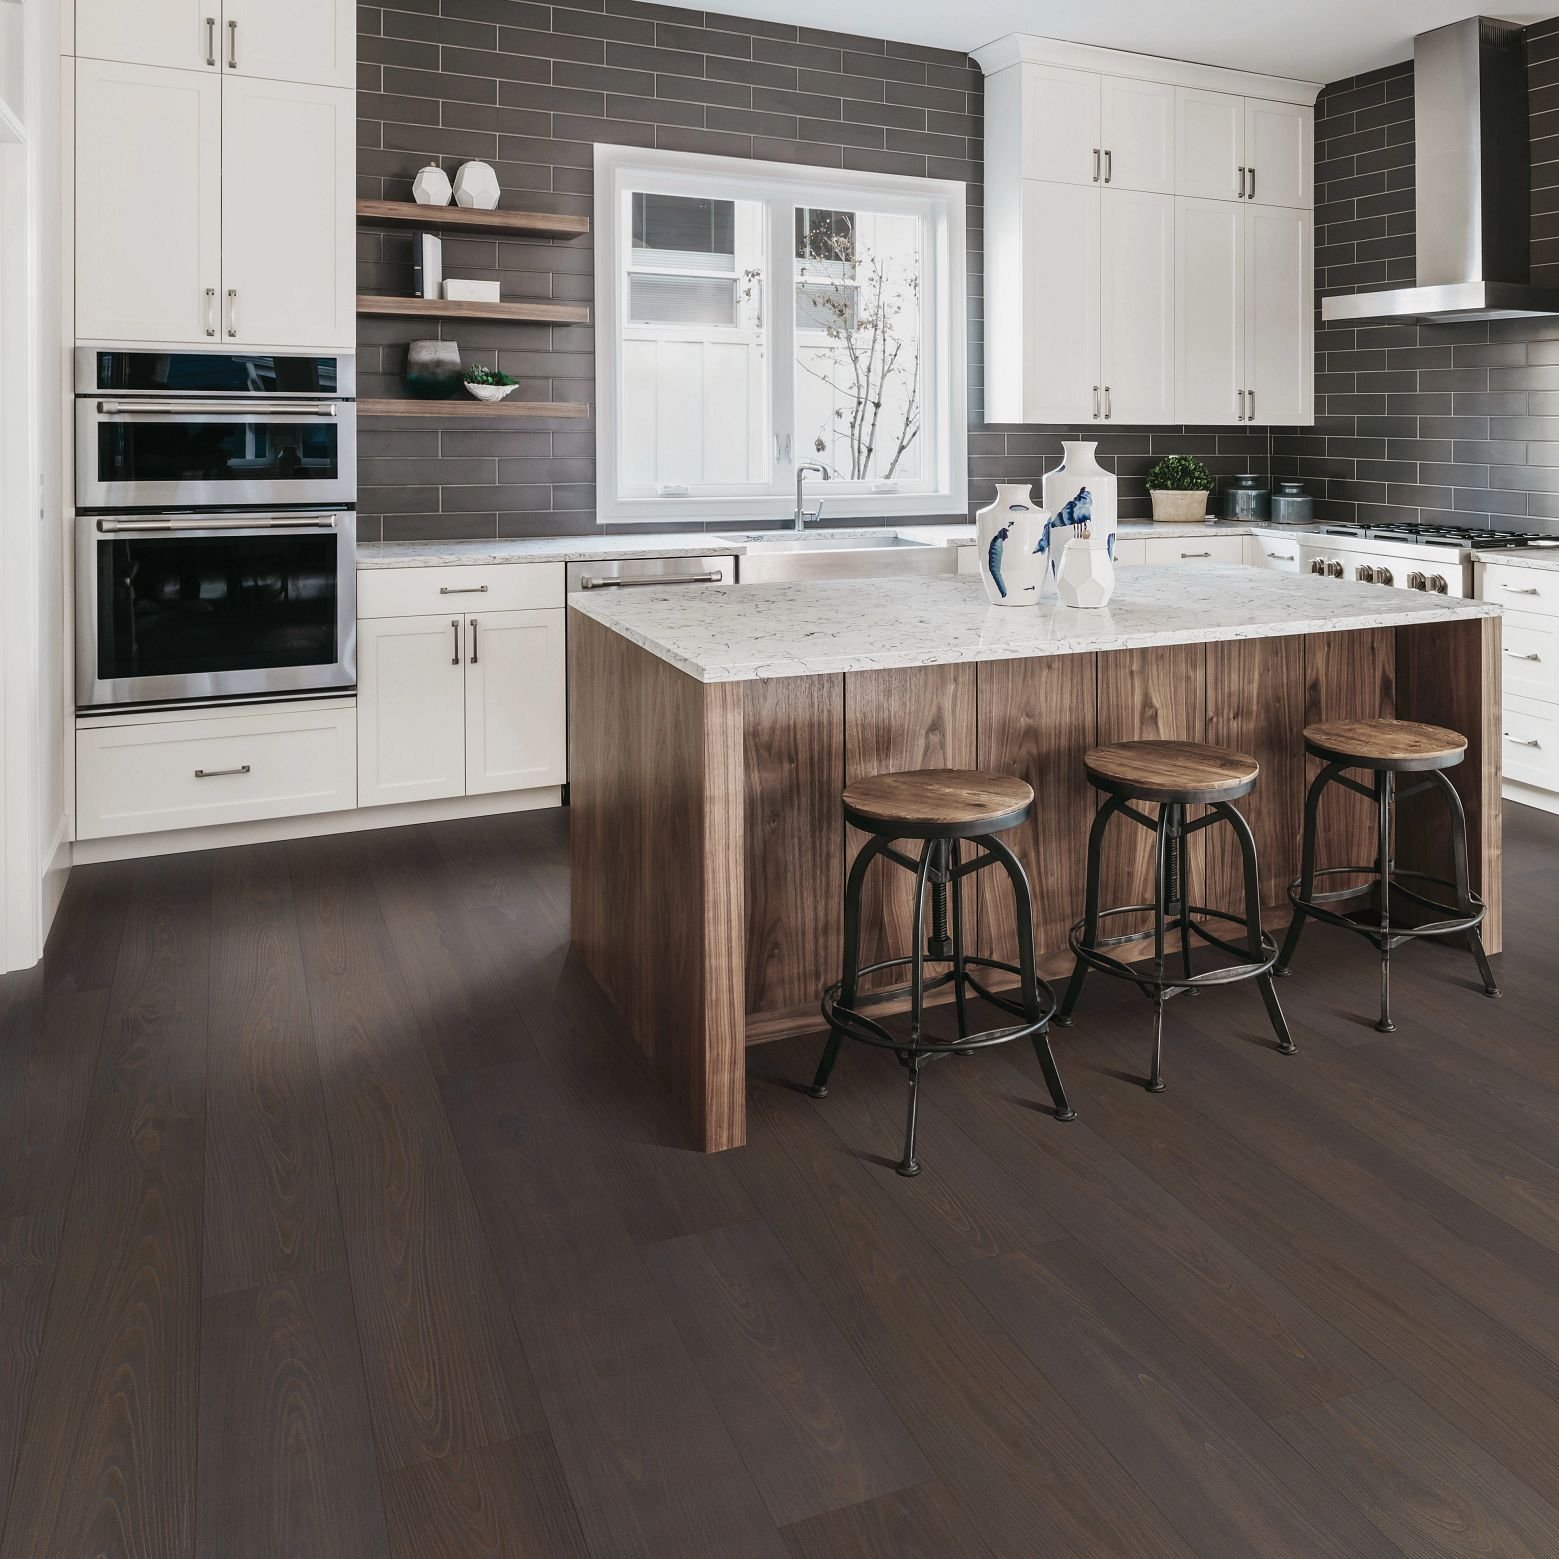 Hardwood Kitchen Floor from Creative Home Enhancements Inc in Anthem, AZ